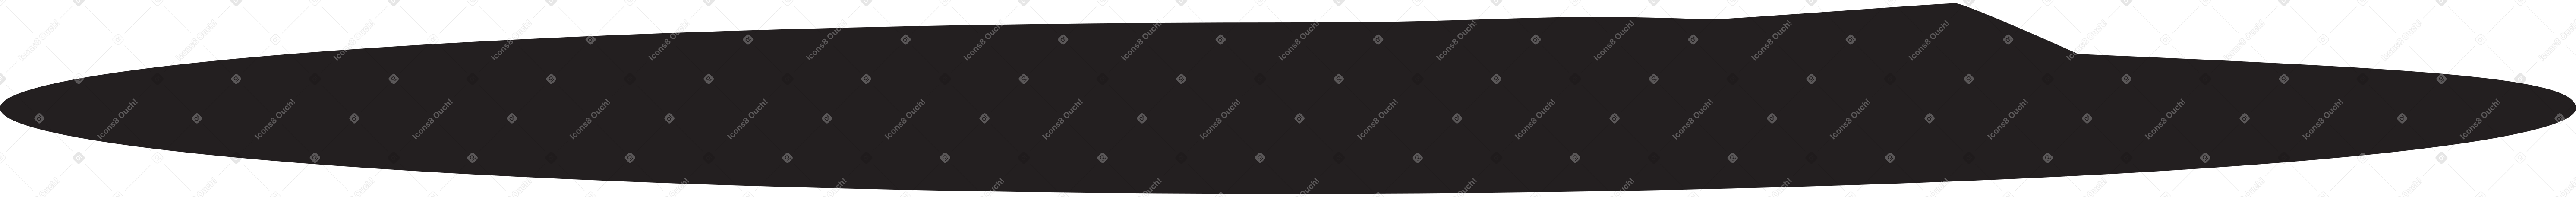 black shadow for background Illustration in PNG, SVG